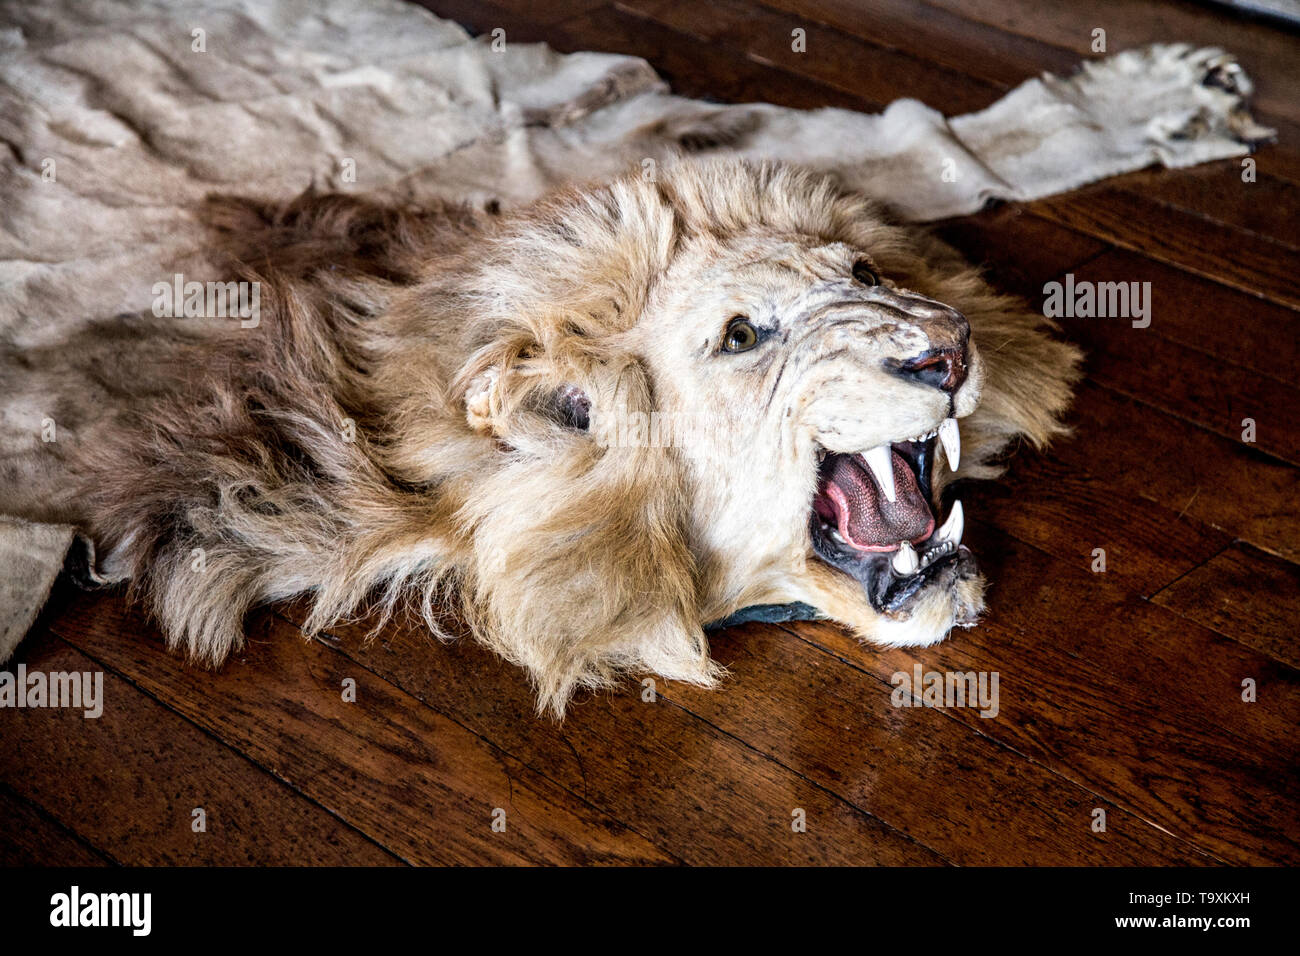 Lion skin rug at Arundel Castle, Arundel, UK Stock Photo